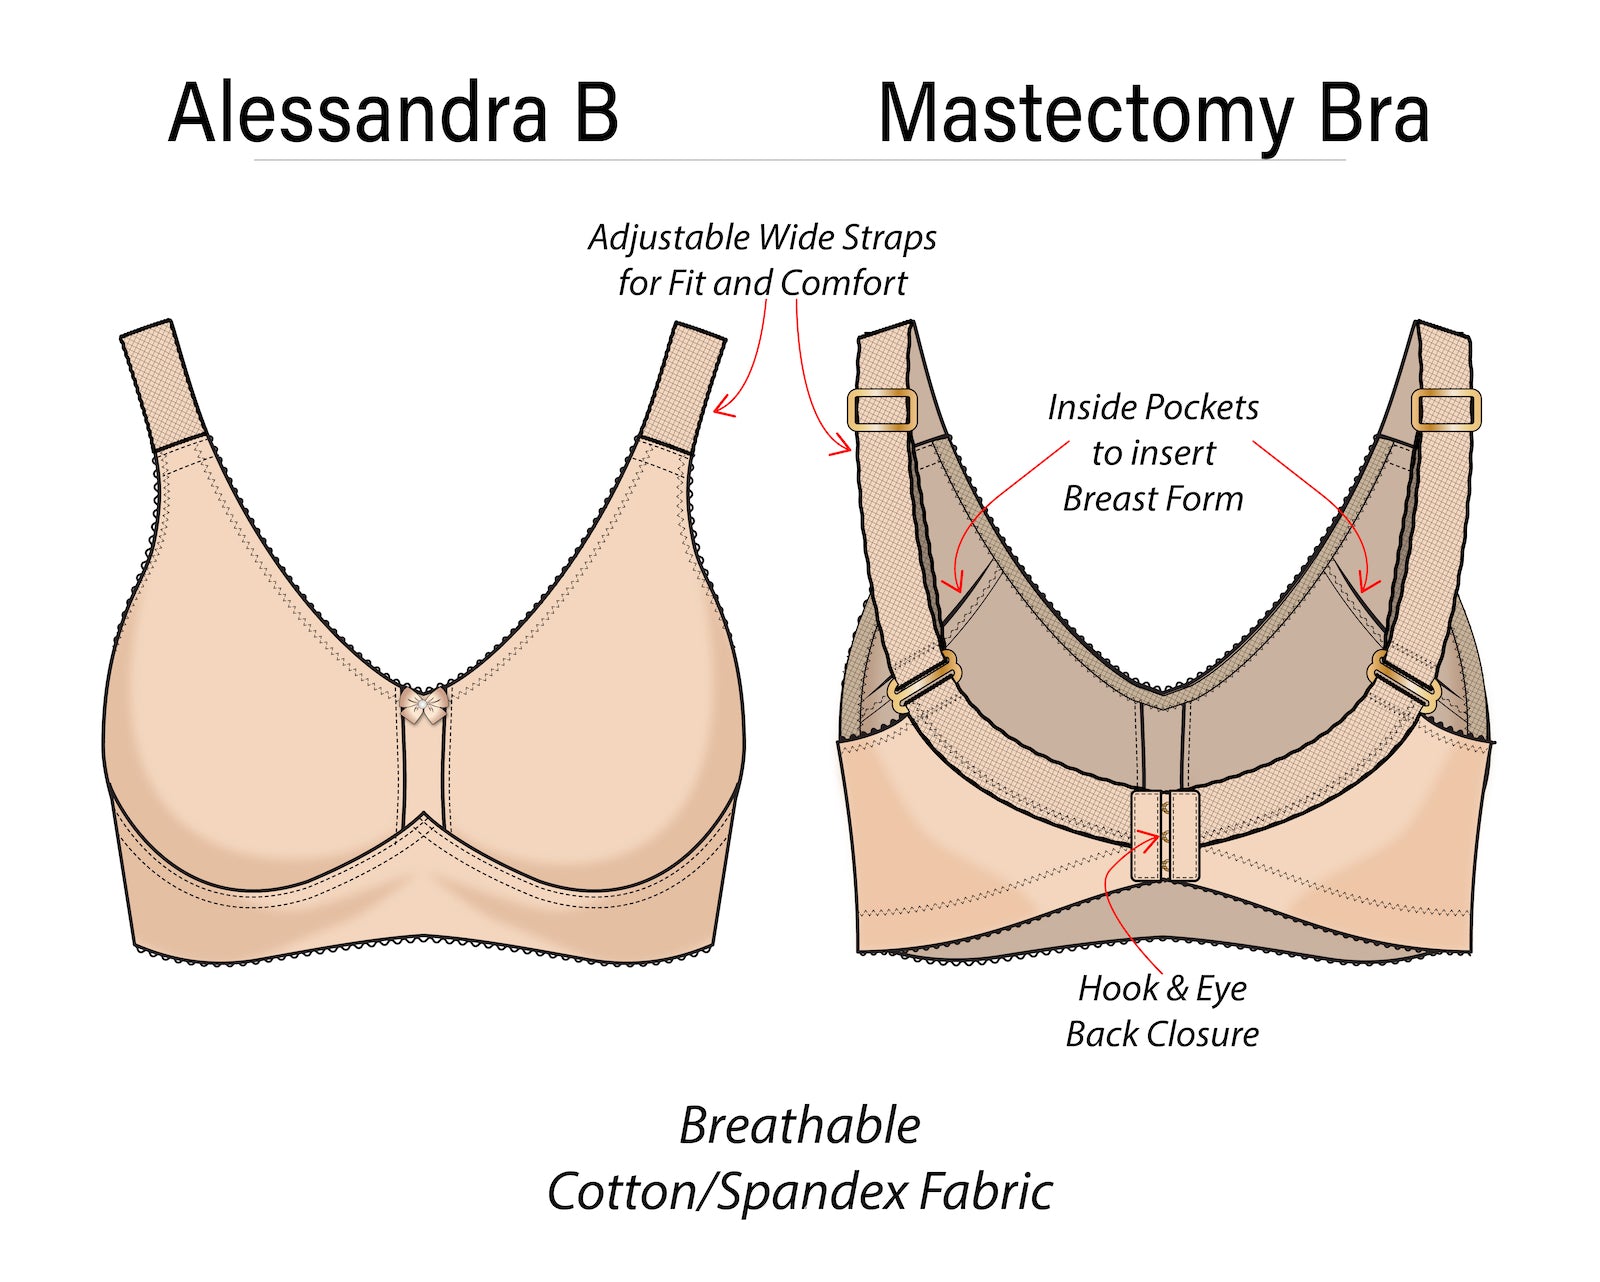 34D Bra Size Breast Form Pockets Bras